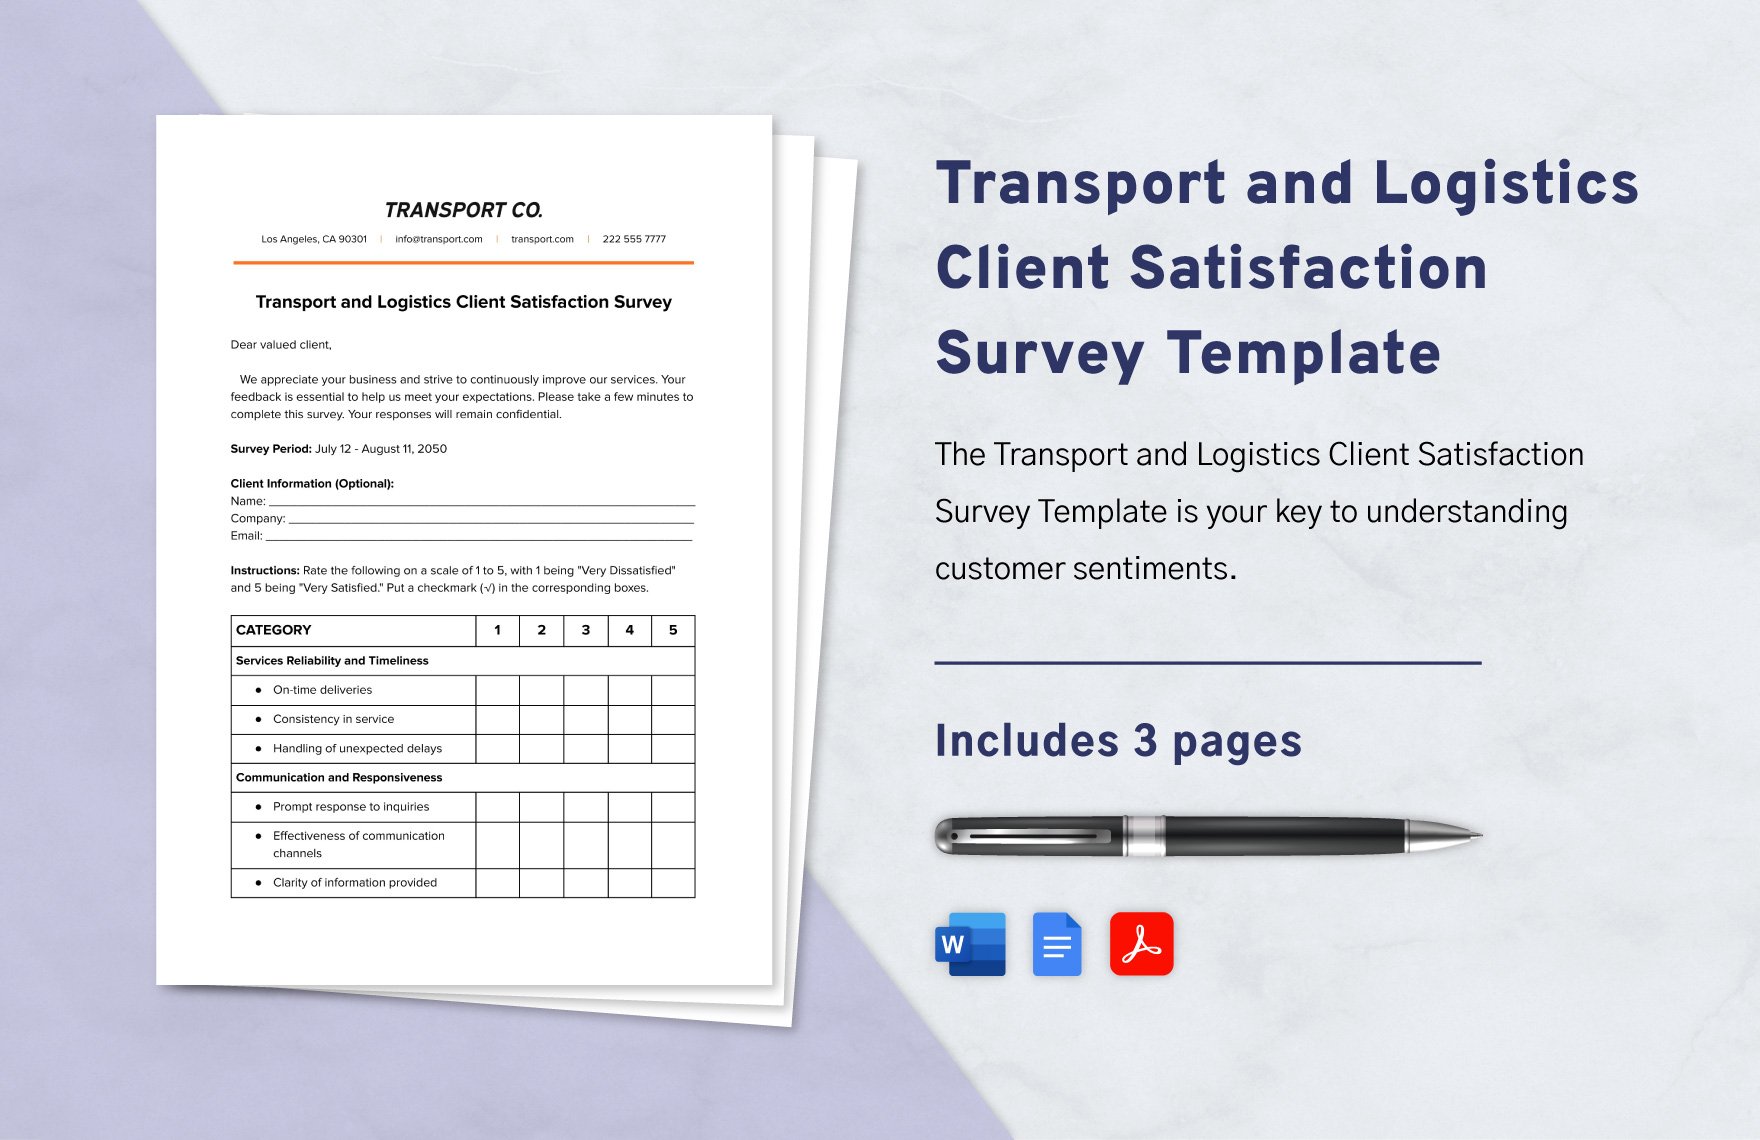 Transport and Logistics Client Satisfaction Survey Template